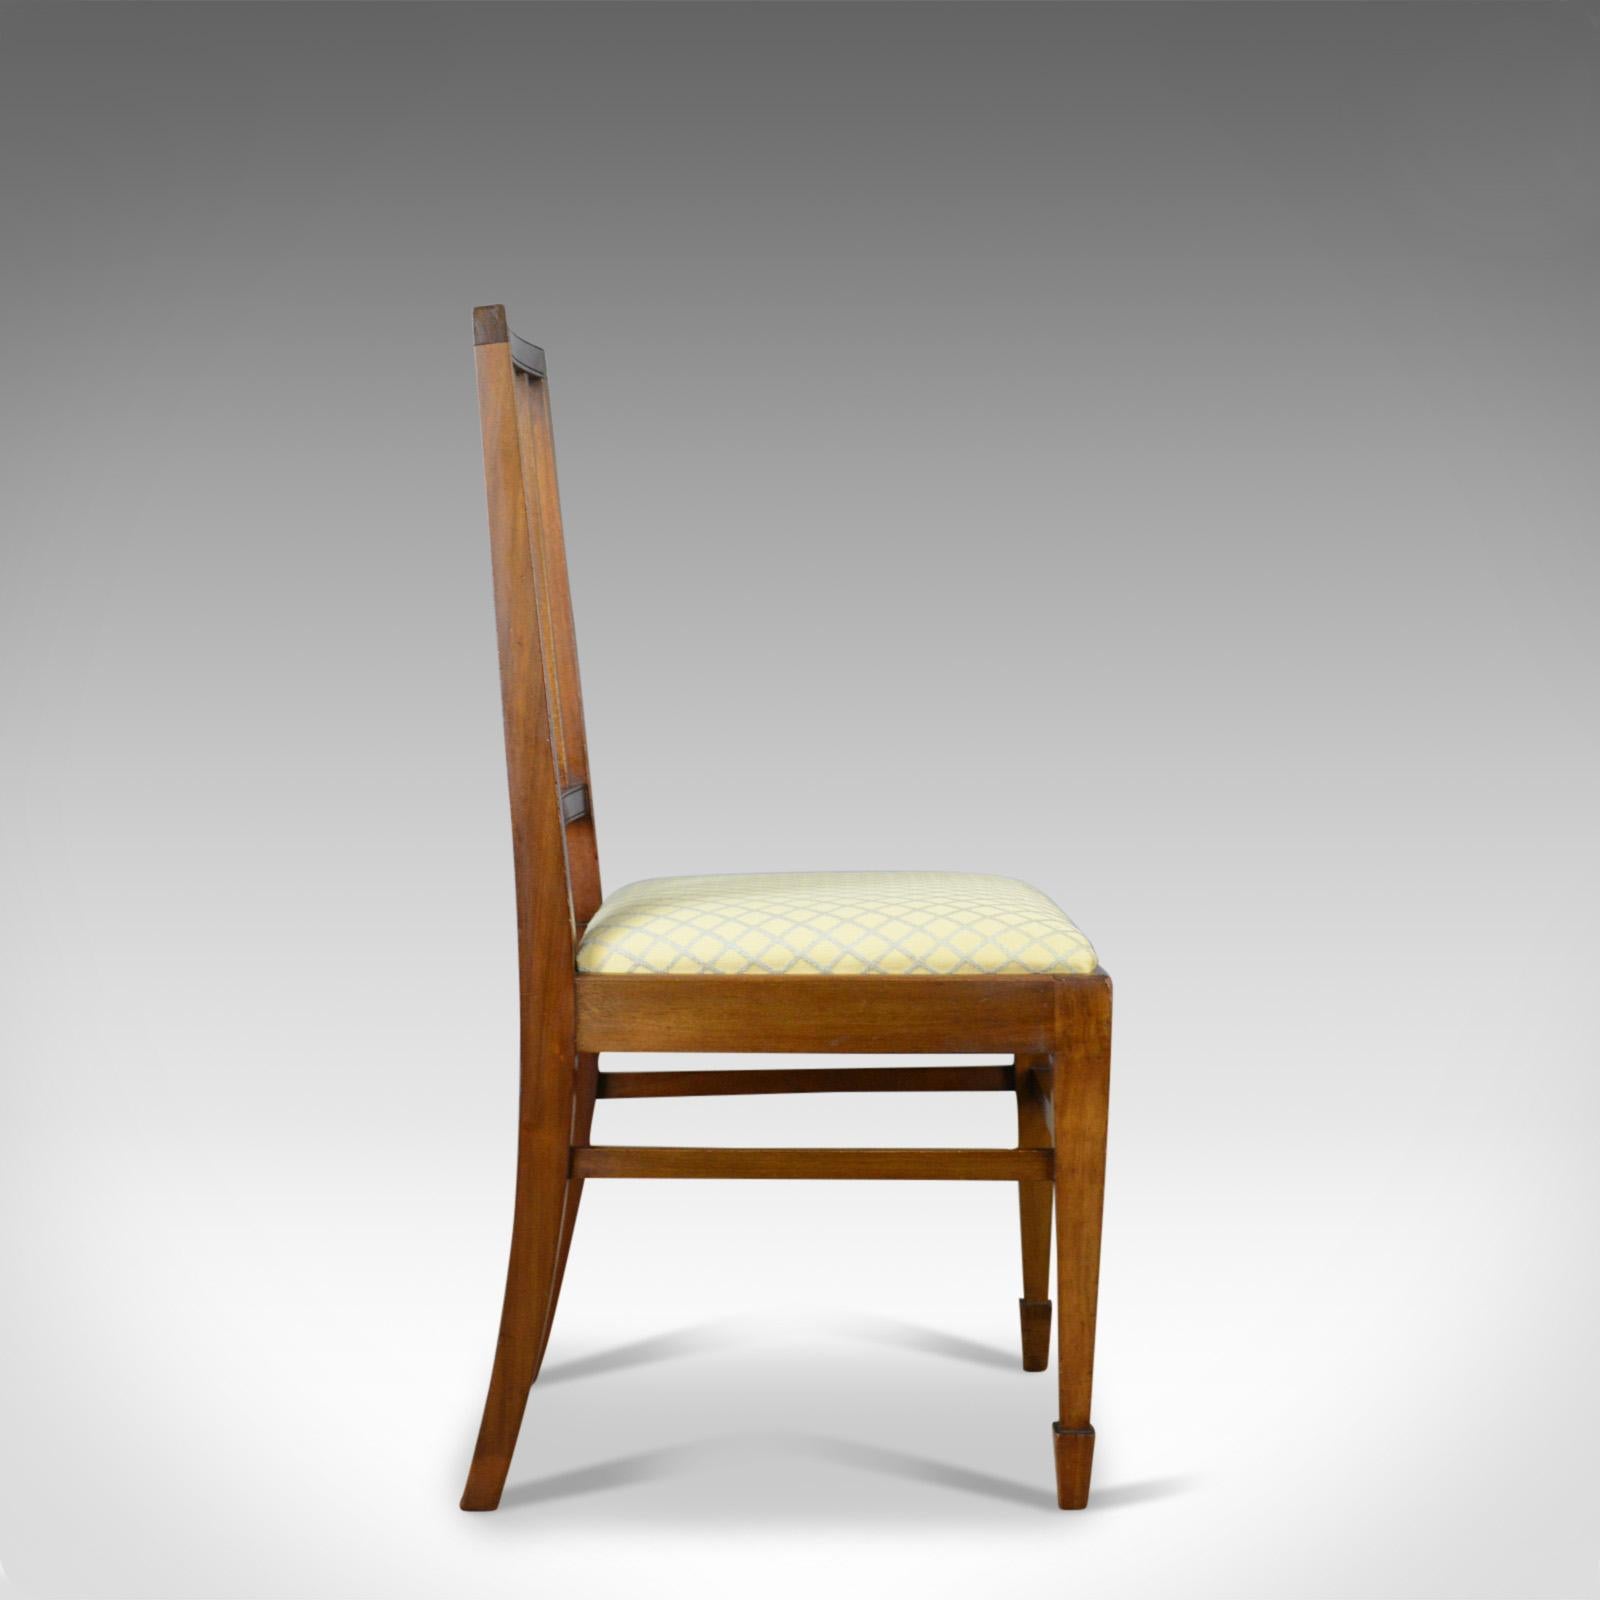 English Set of Four Antique Dining Chairs, Mahogany, Edwardian Sheraton Revival